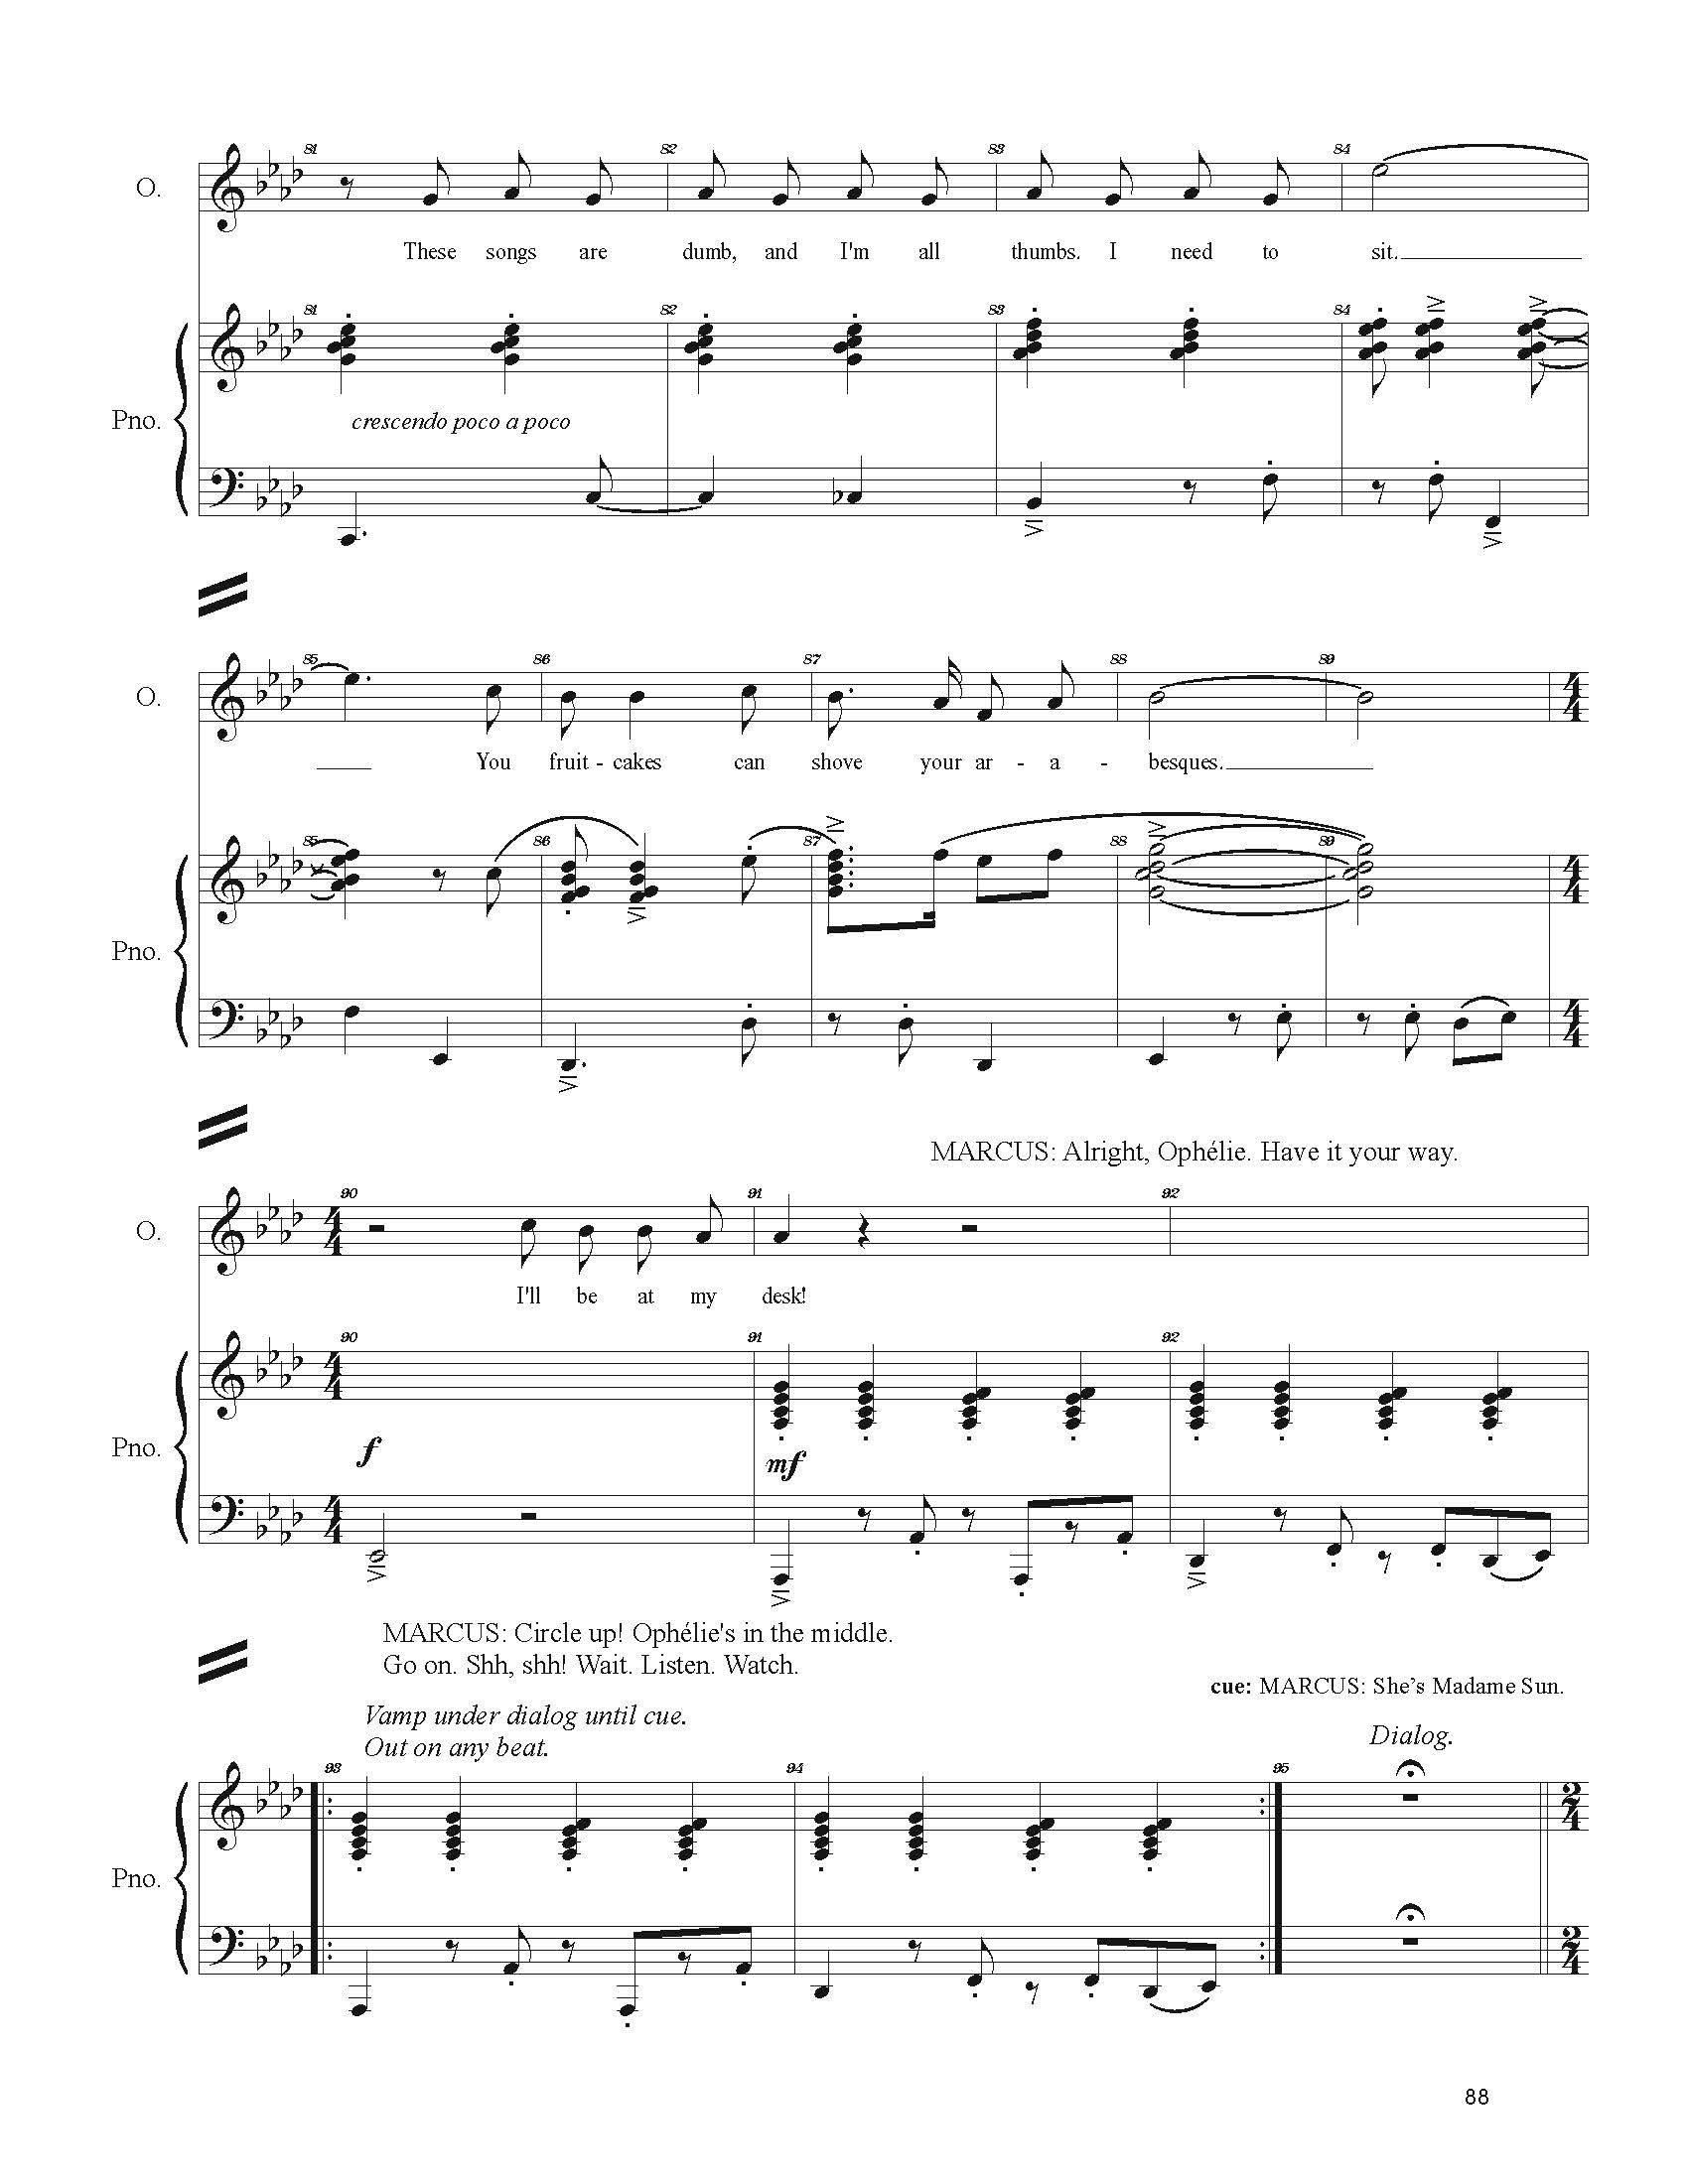 FULL PIANO VOCAL SCORE DRAFT 1 - Score_Page_088.jpg